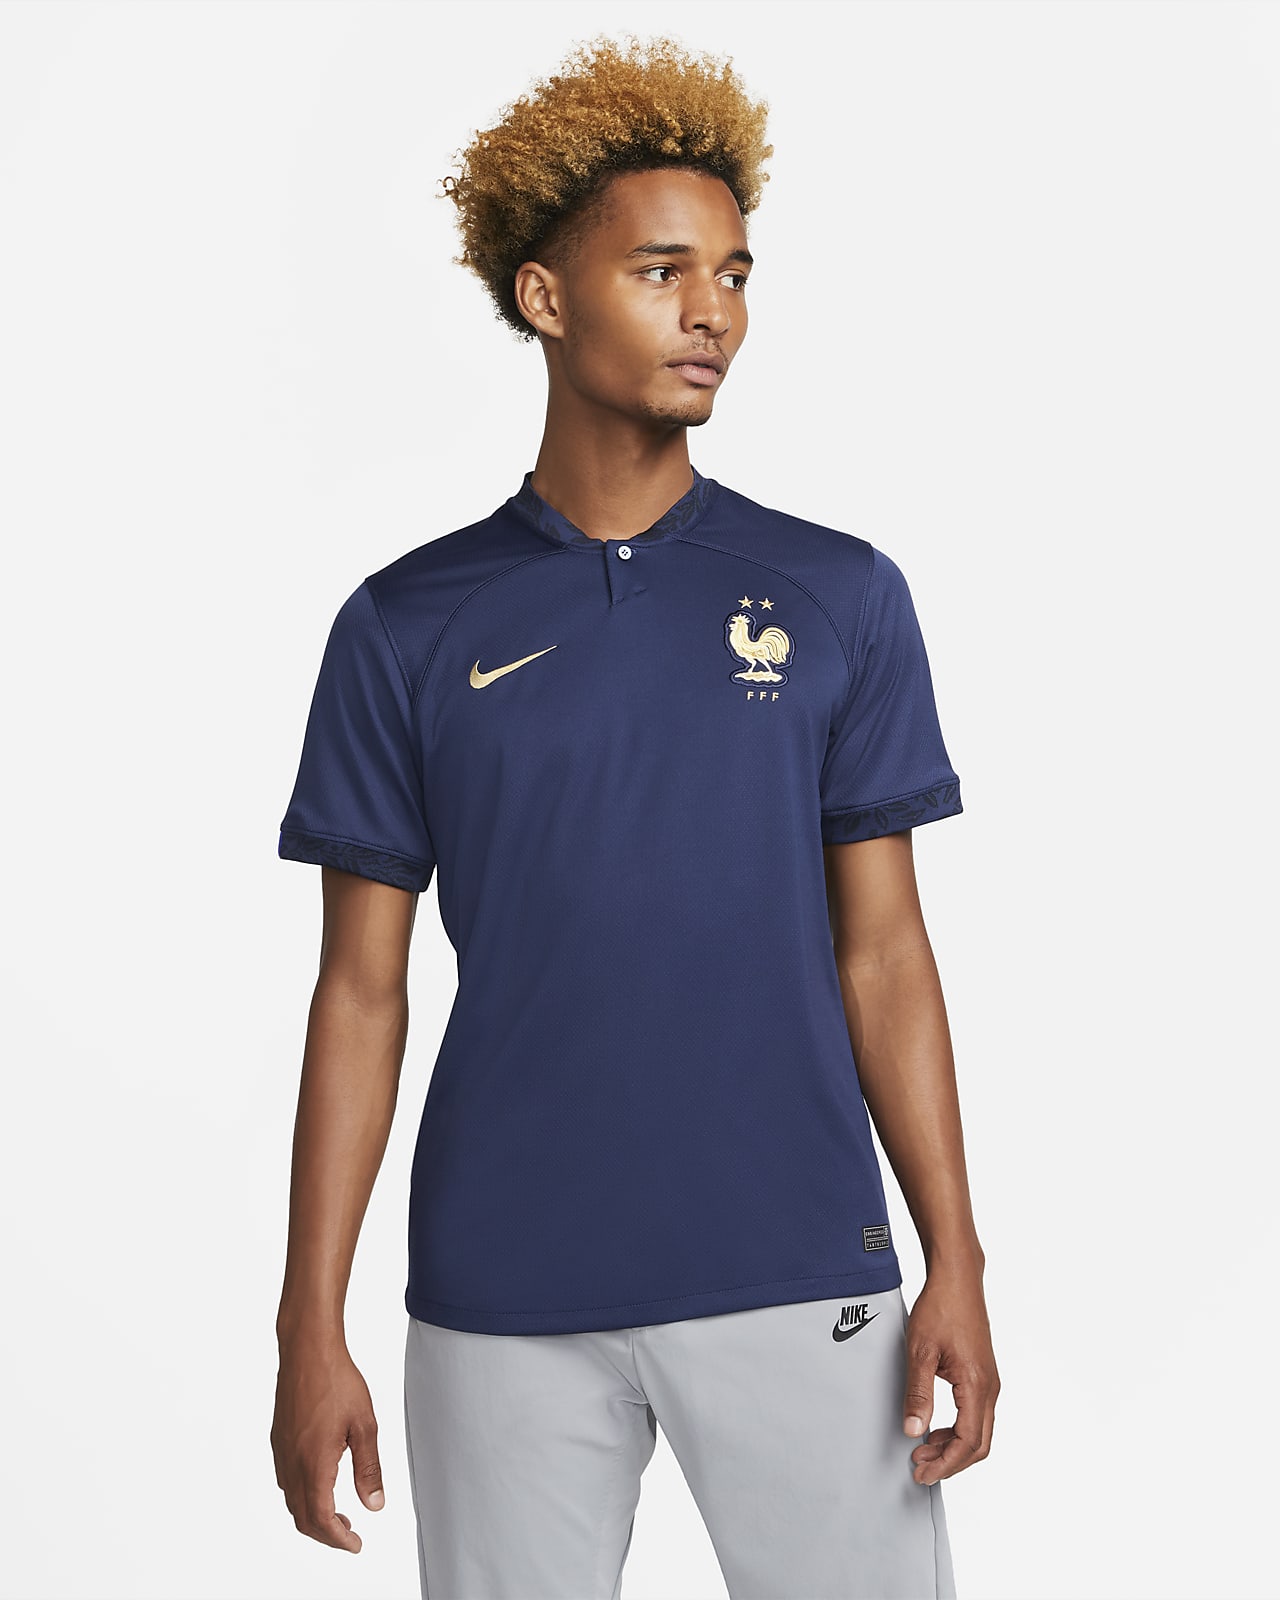 FFF 2022/23 Stadium Home Men's Nike Dri-FIT Football Shirt